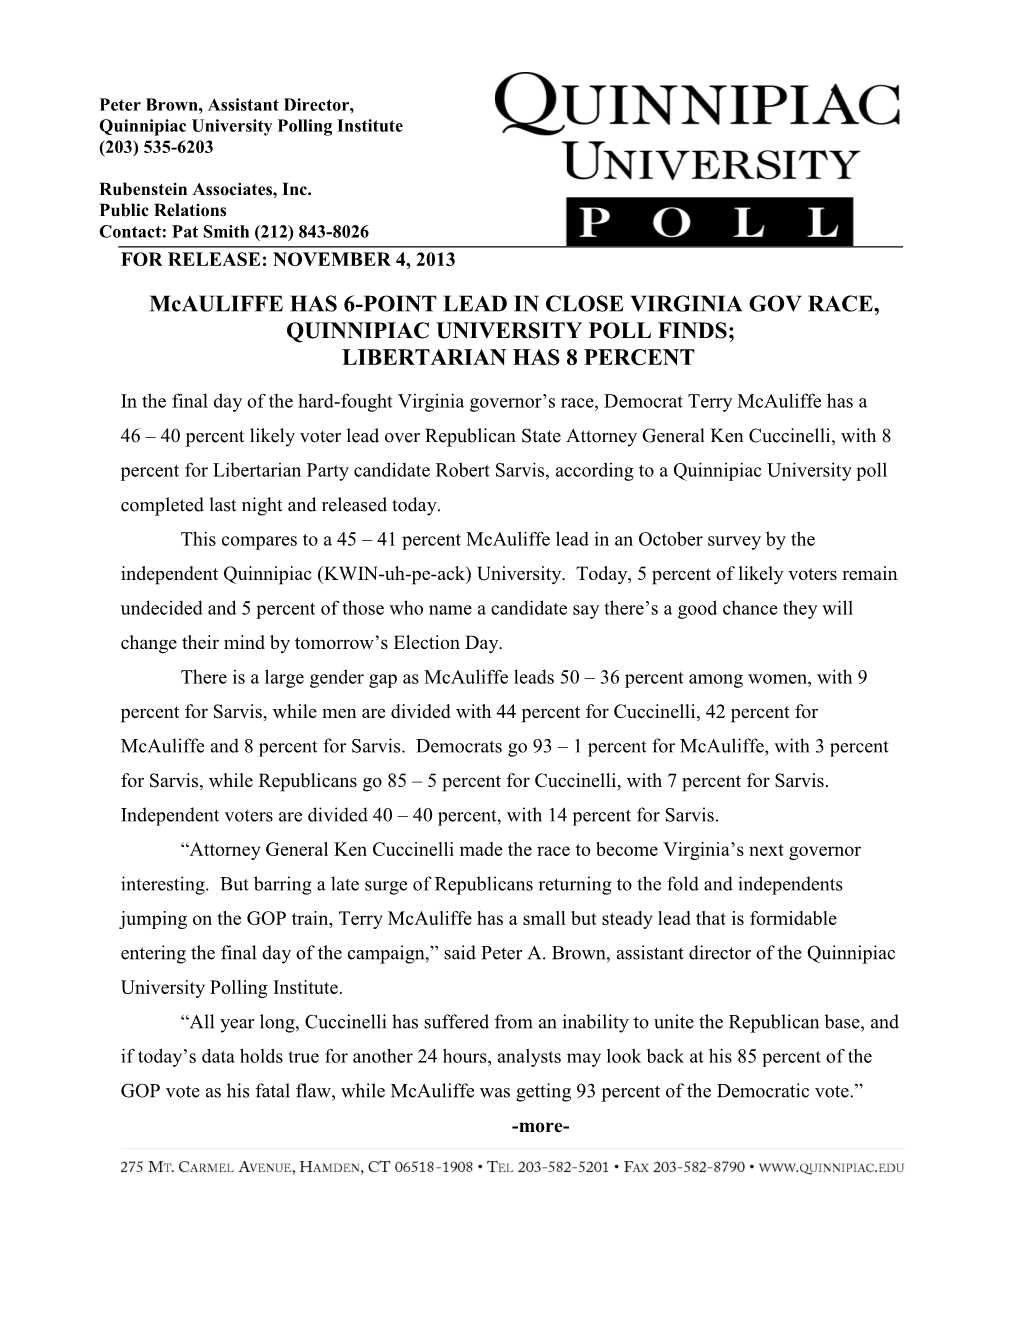 Mcauliffe HAS 6-POINT LEAD in CLOSE VIRGINIA GOV RACE, QUINNIPIAC UNIVERSITY POLL FINDS; LIBERTARIAN HAS 8 PERCENT